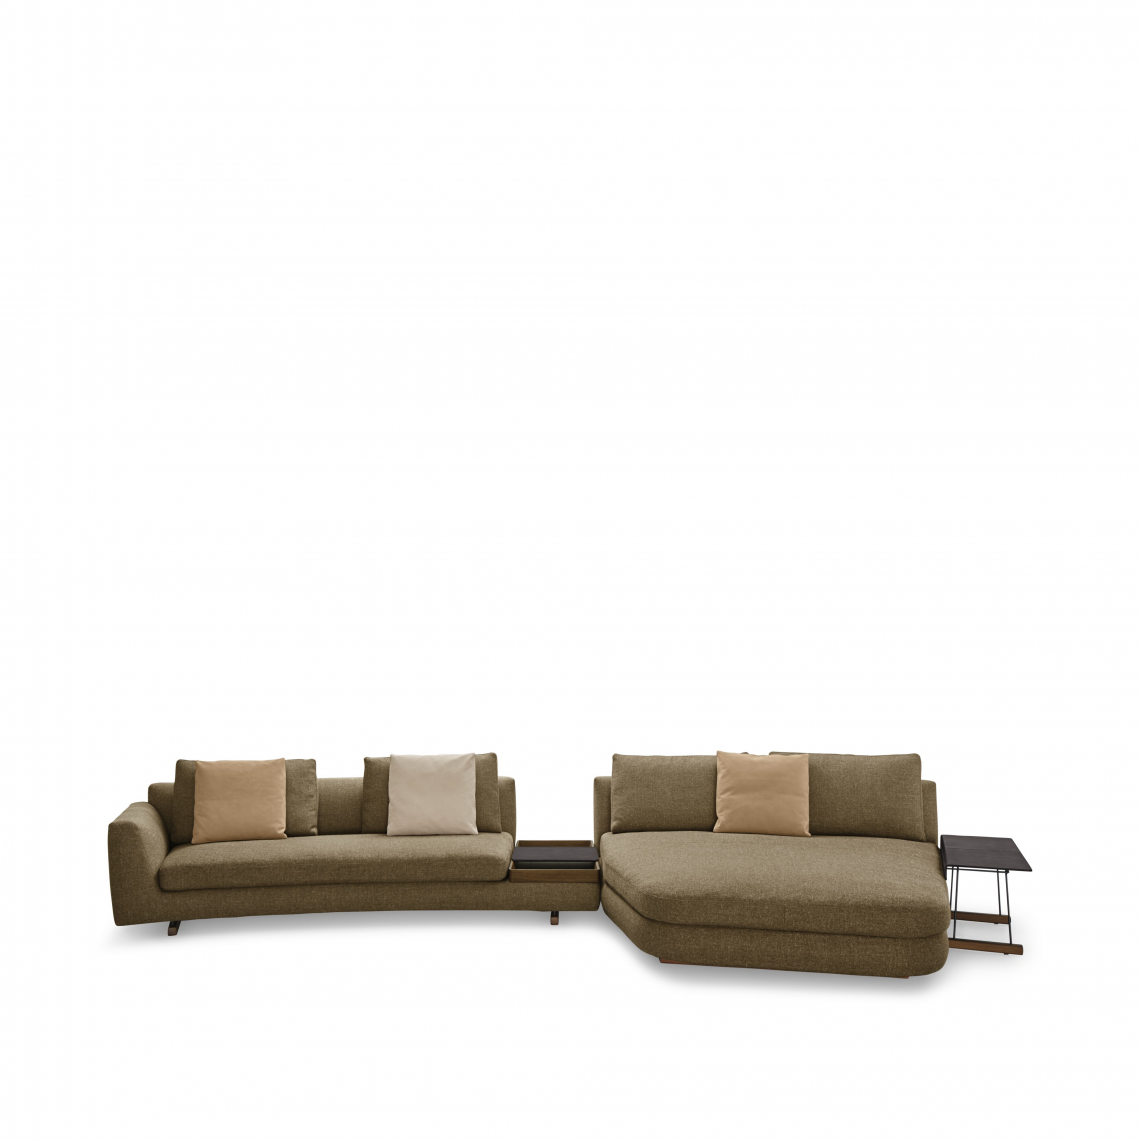 Tama Living Sofa.组合沙发细节图2